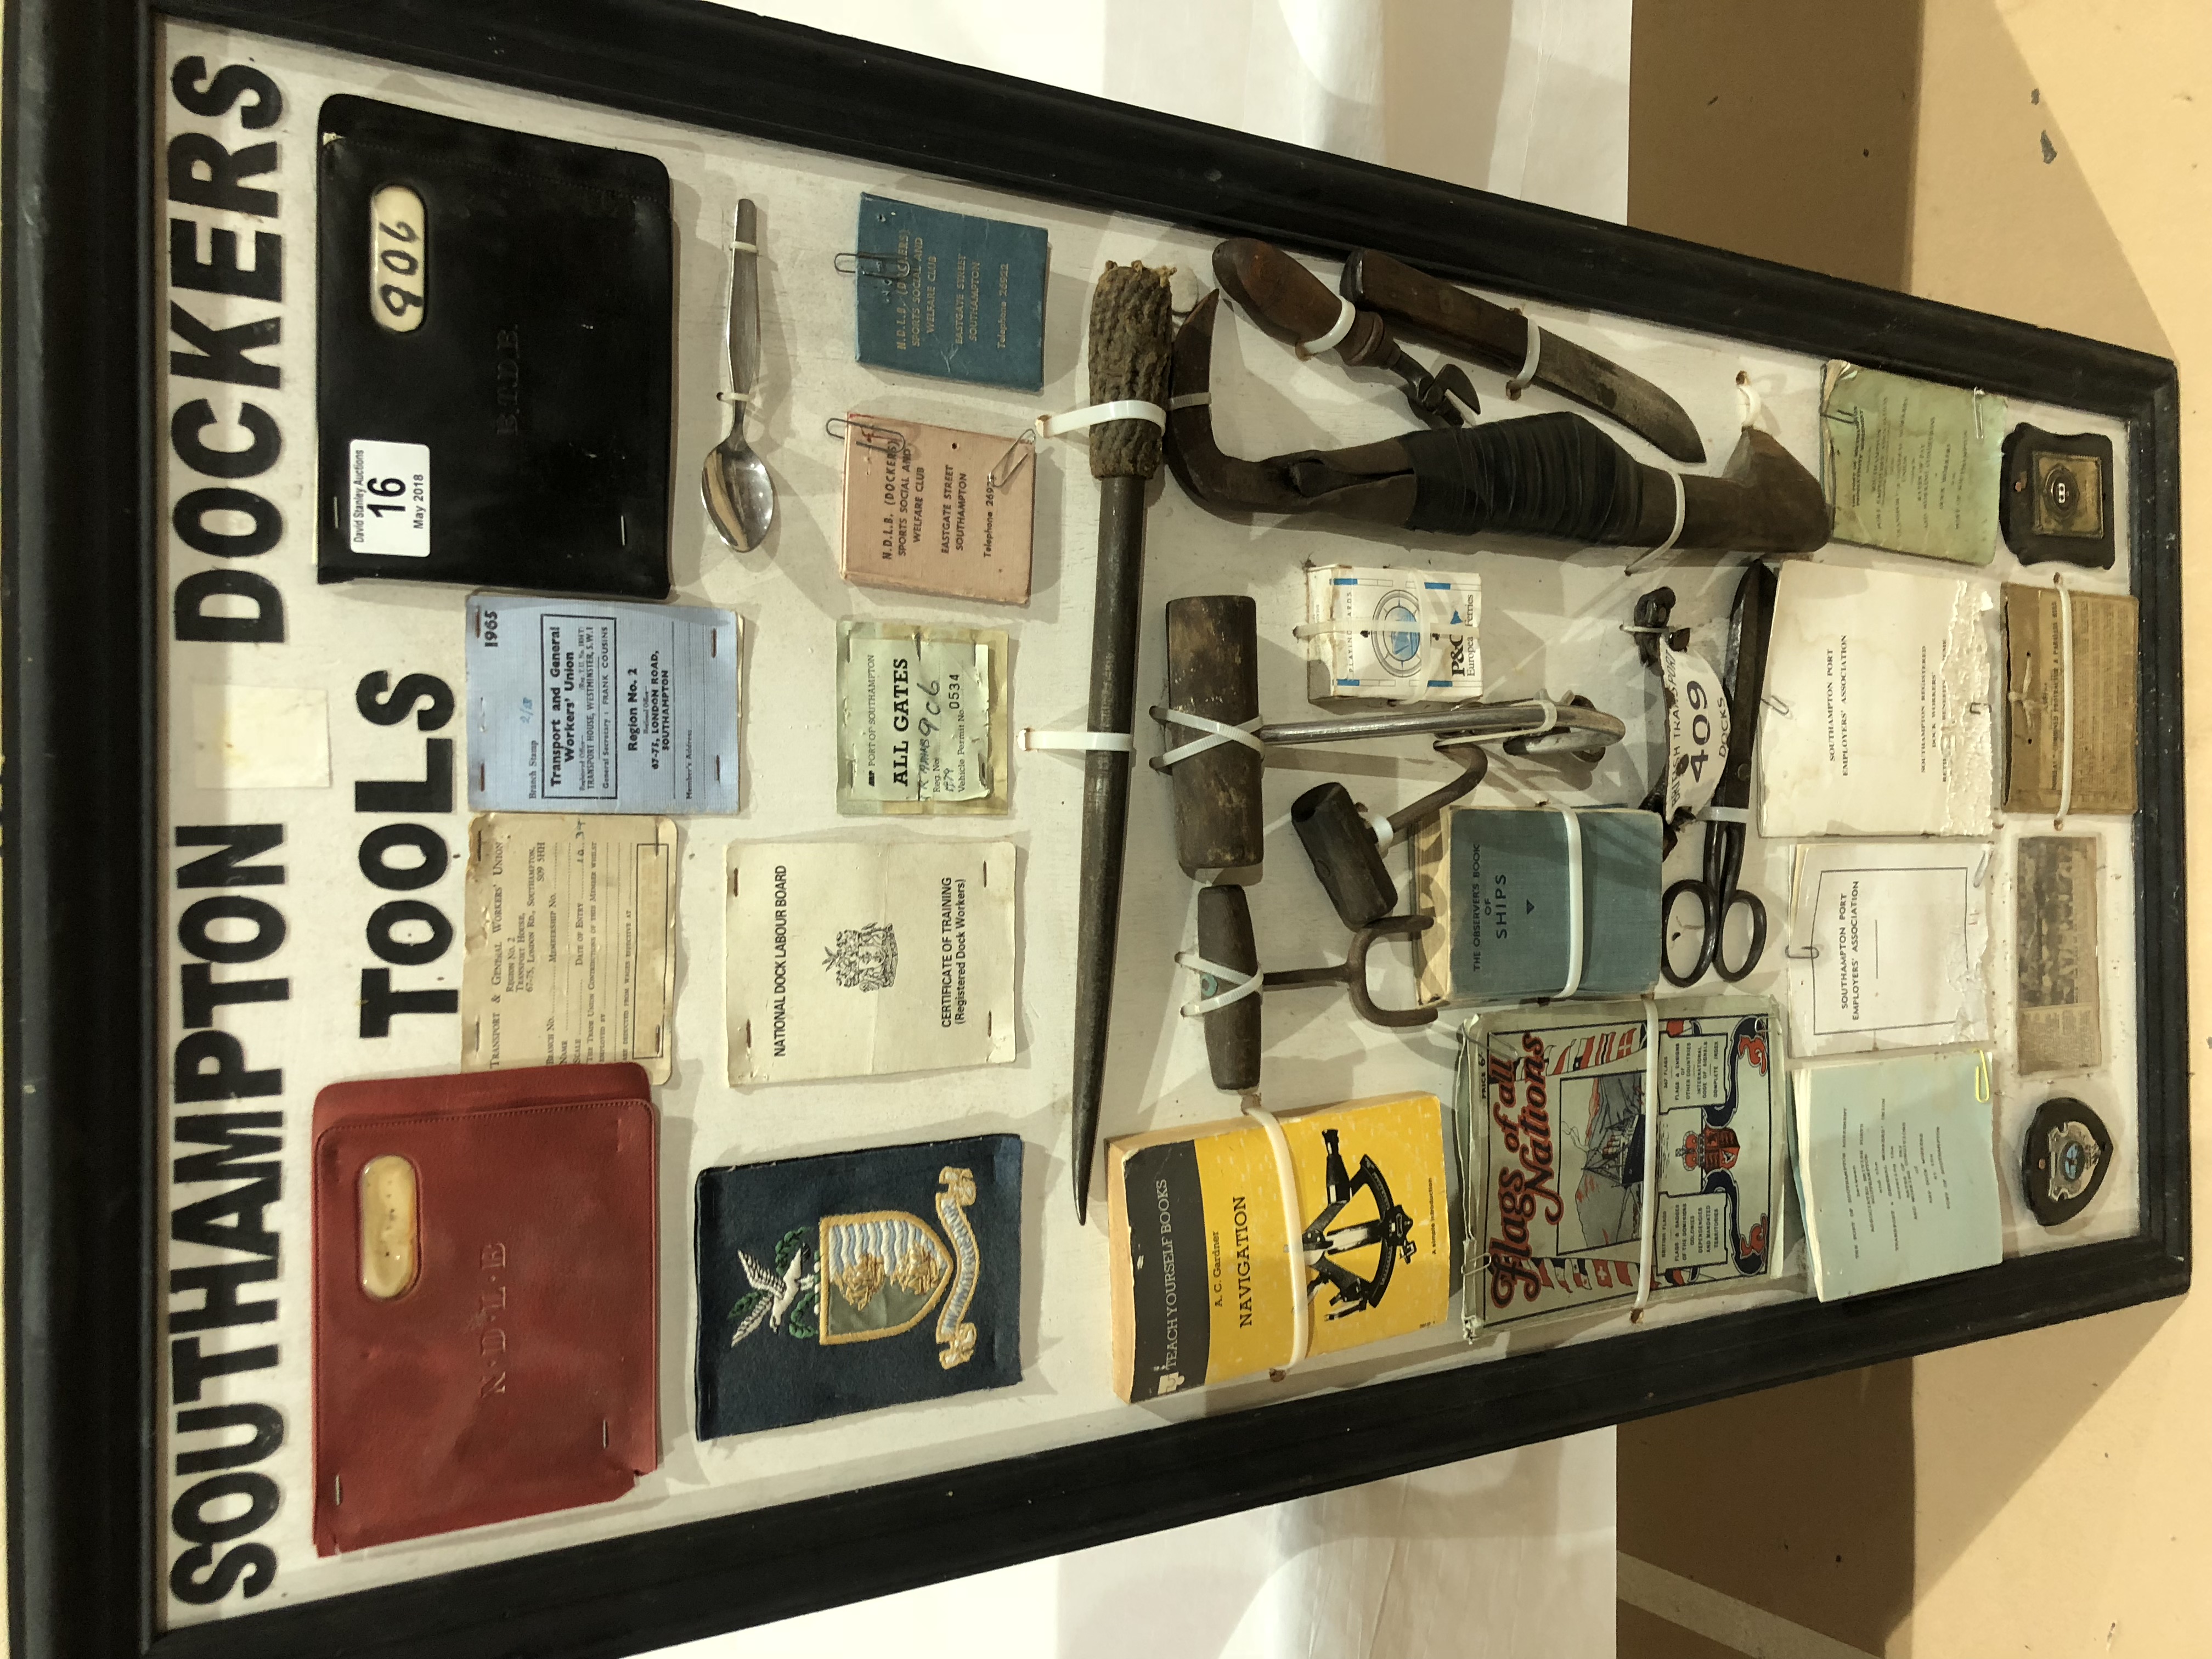 A display of Southampton Doctors tools